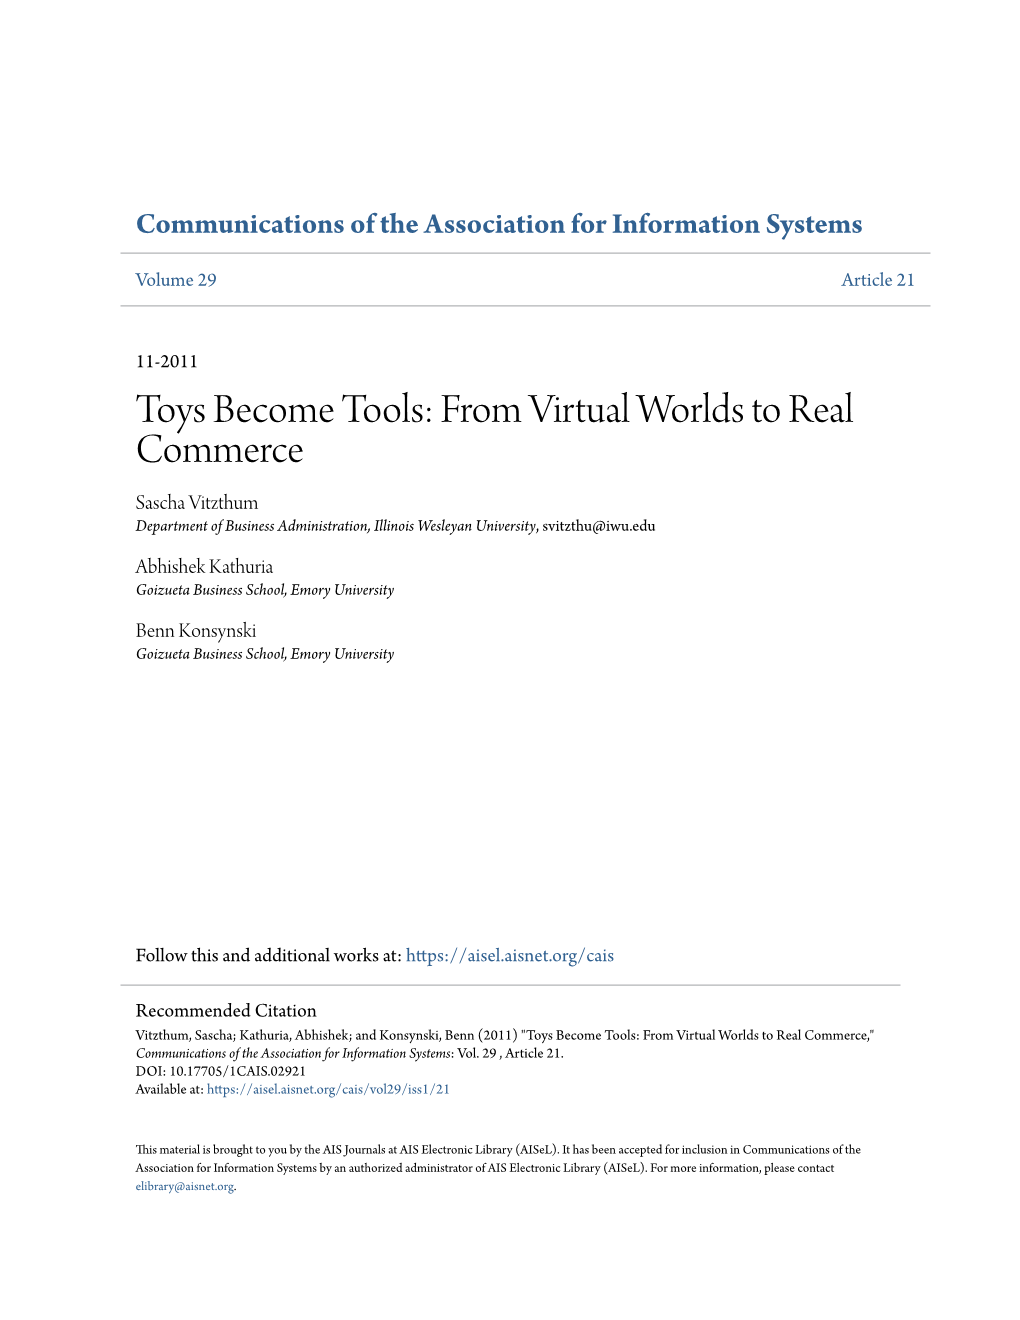 From Virtual Worlds to Real Commerce Sascha Vitzthum Department of Business Administration, Illinois Wesleyan University, Svitzthu@Iwu.Edu